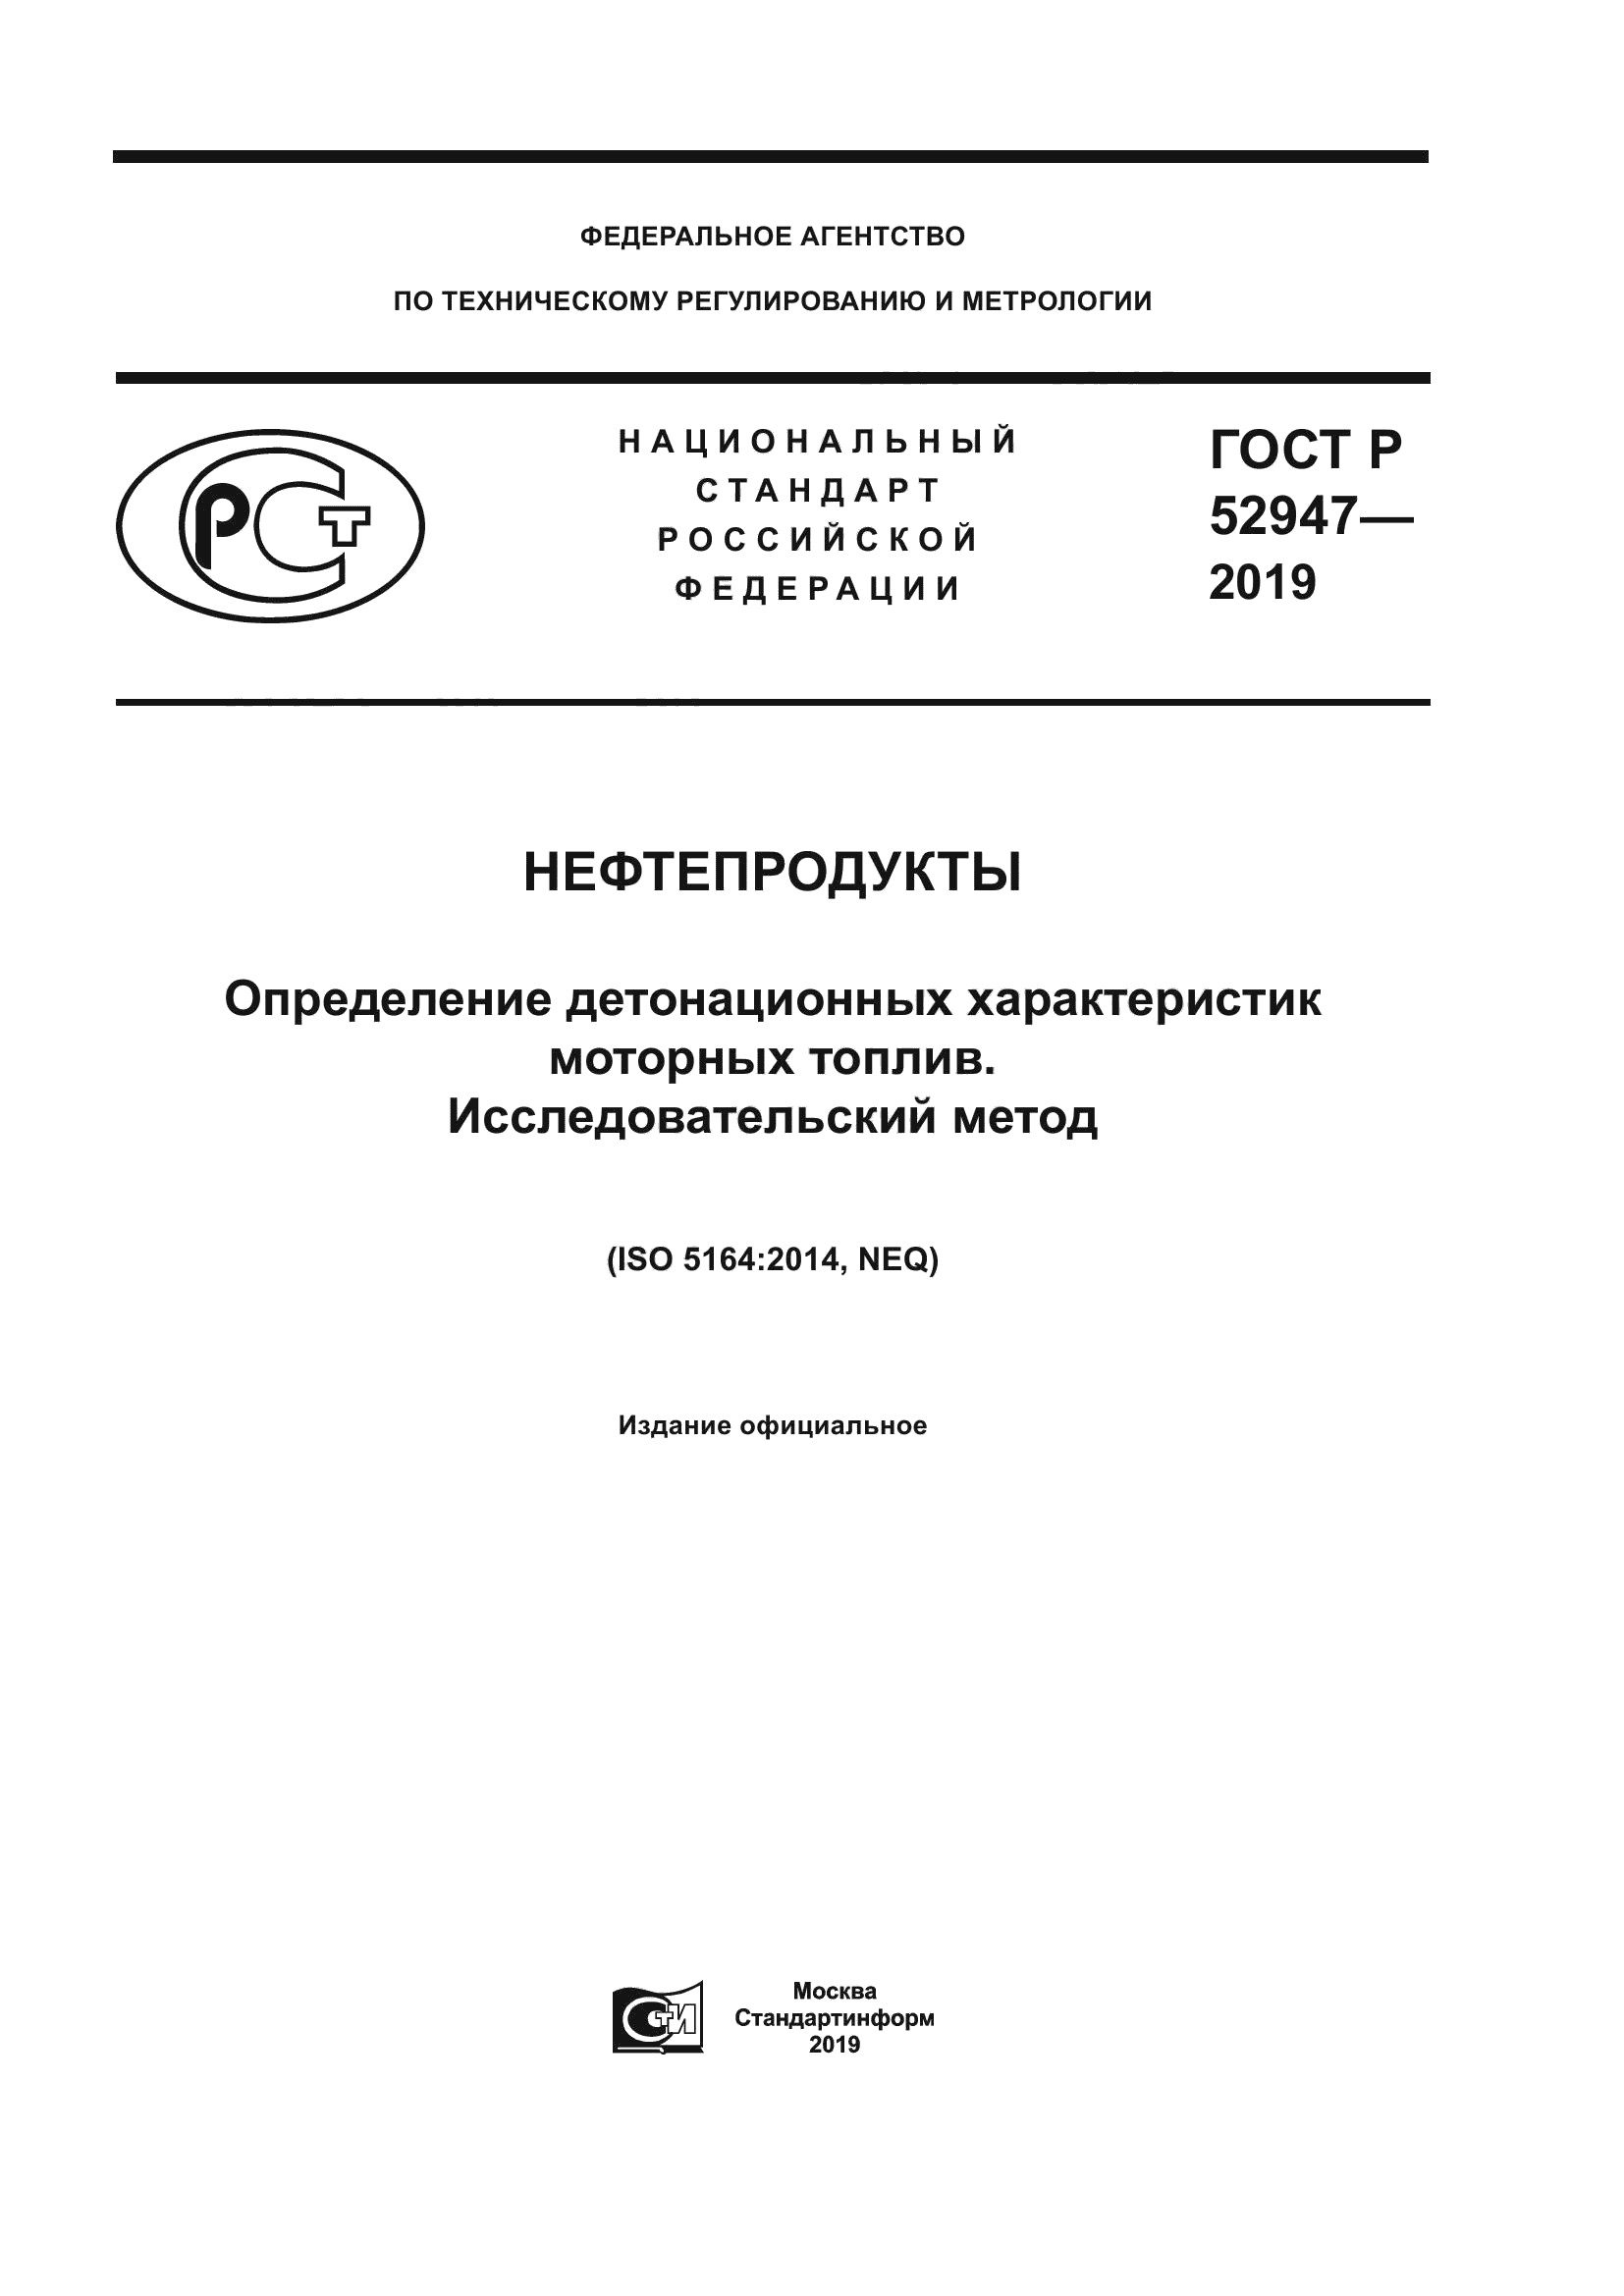 ГОСТ Р 52947-2019